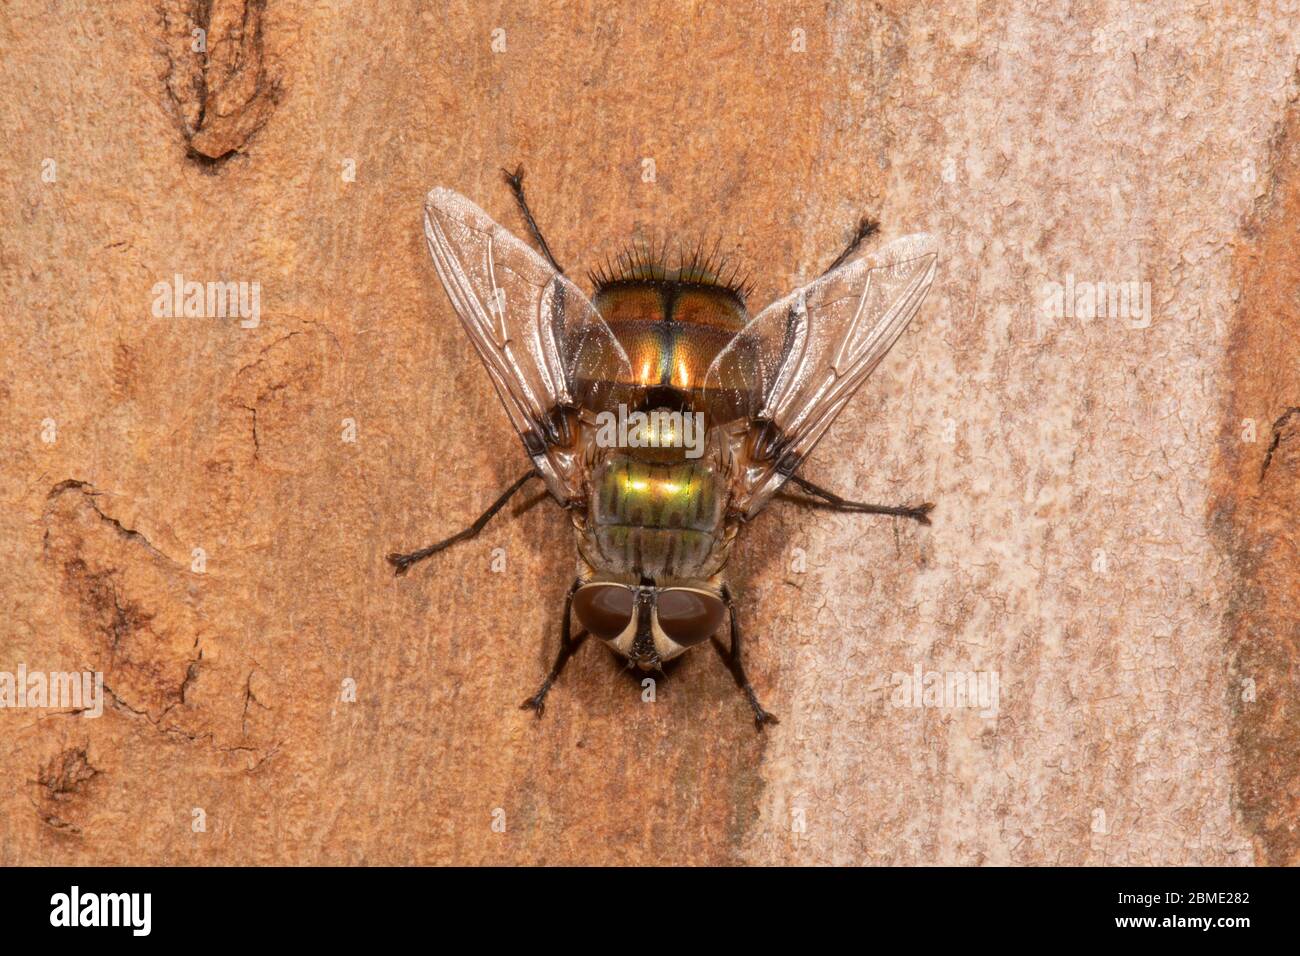 A Blowfly on bark, Northern Territory, NT, Australia Stock Photo